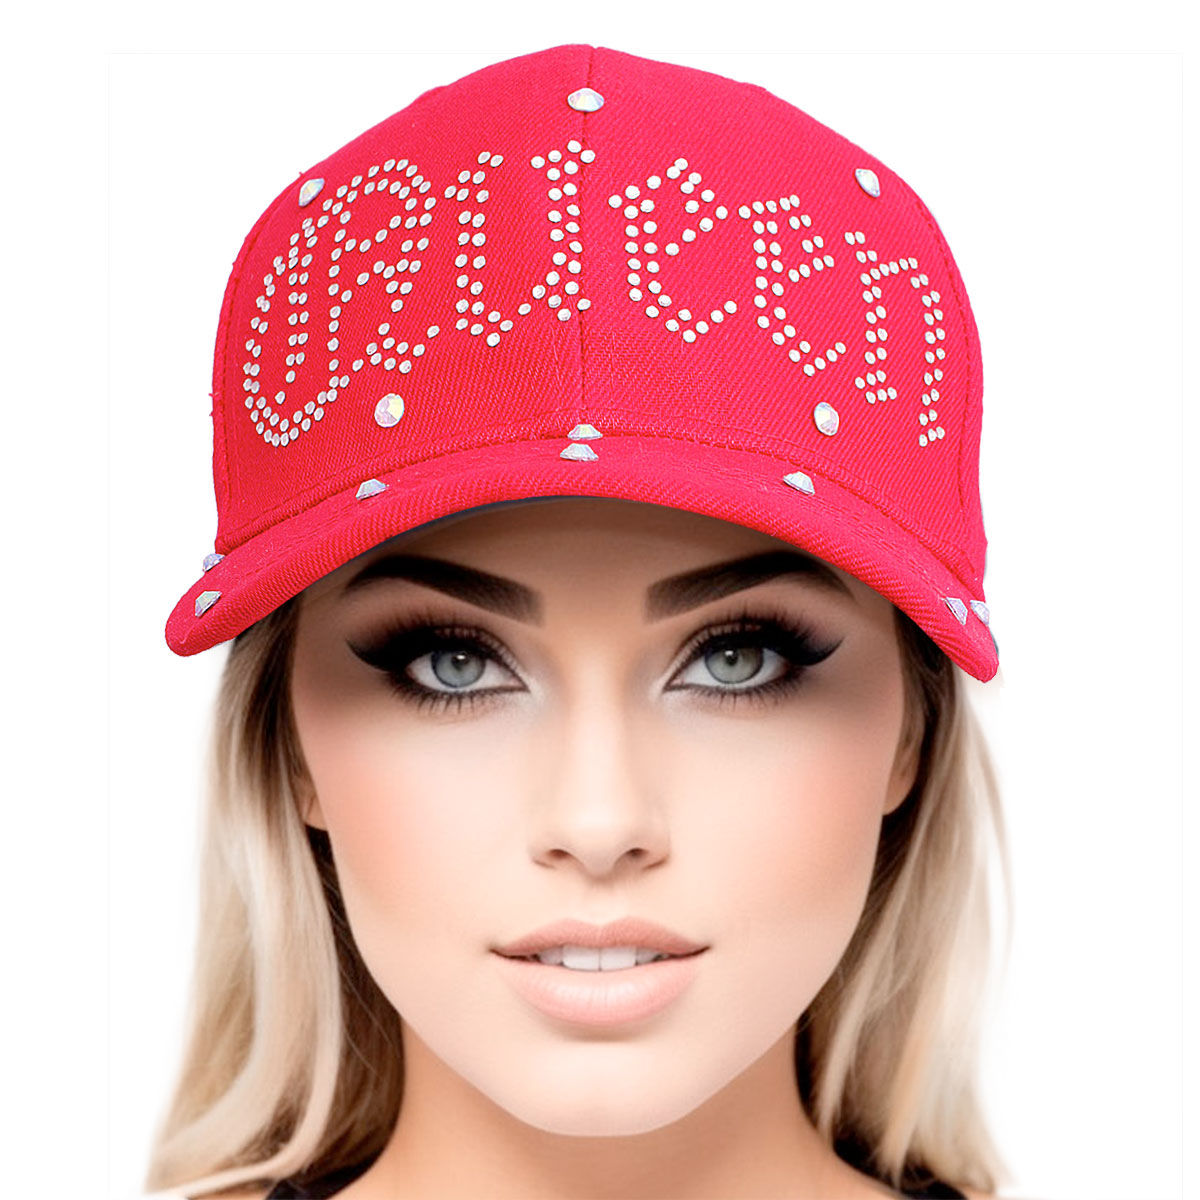 Hat Red Canvas Queen Baseball Cap for Women